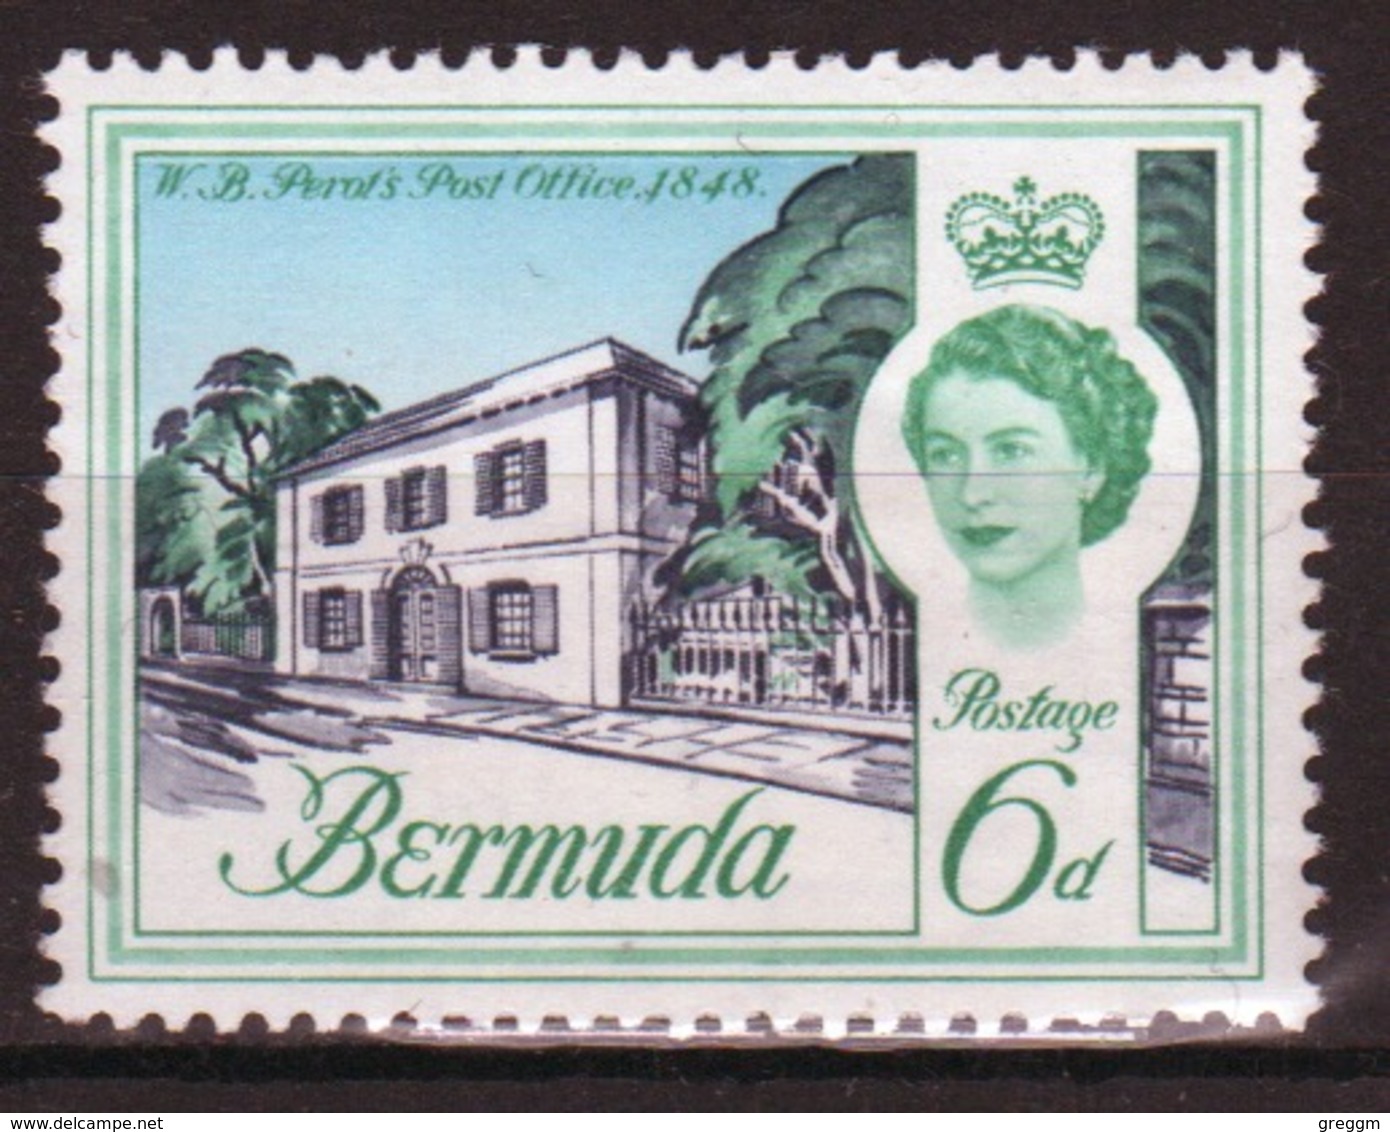 Bermuda Elizabeth II 1962 Single 6d Stamp From The Definitive Set. - Bermuda